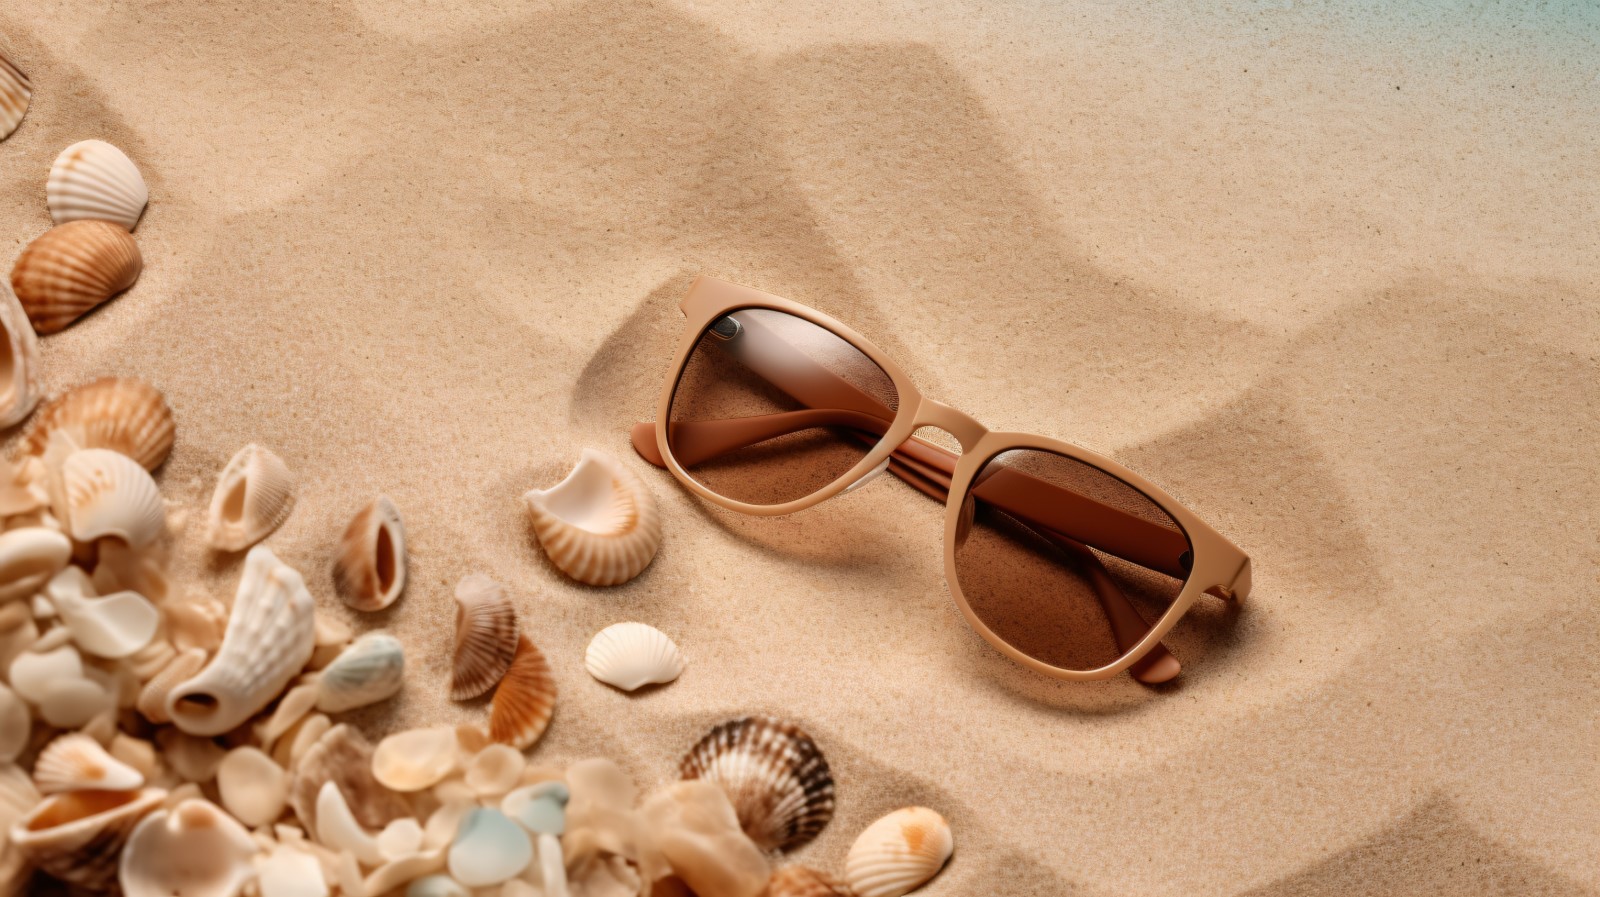 Sunglasses seashells and beach accessories on sandy beach 187